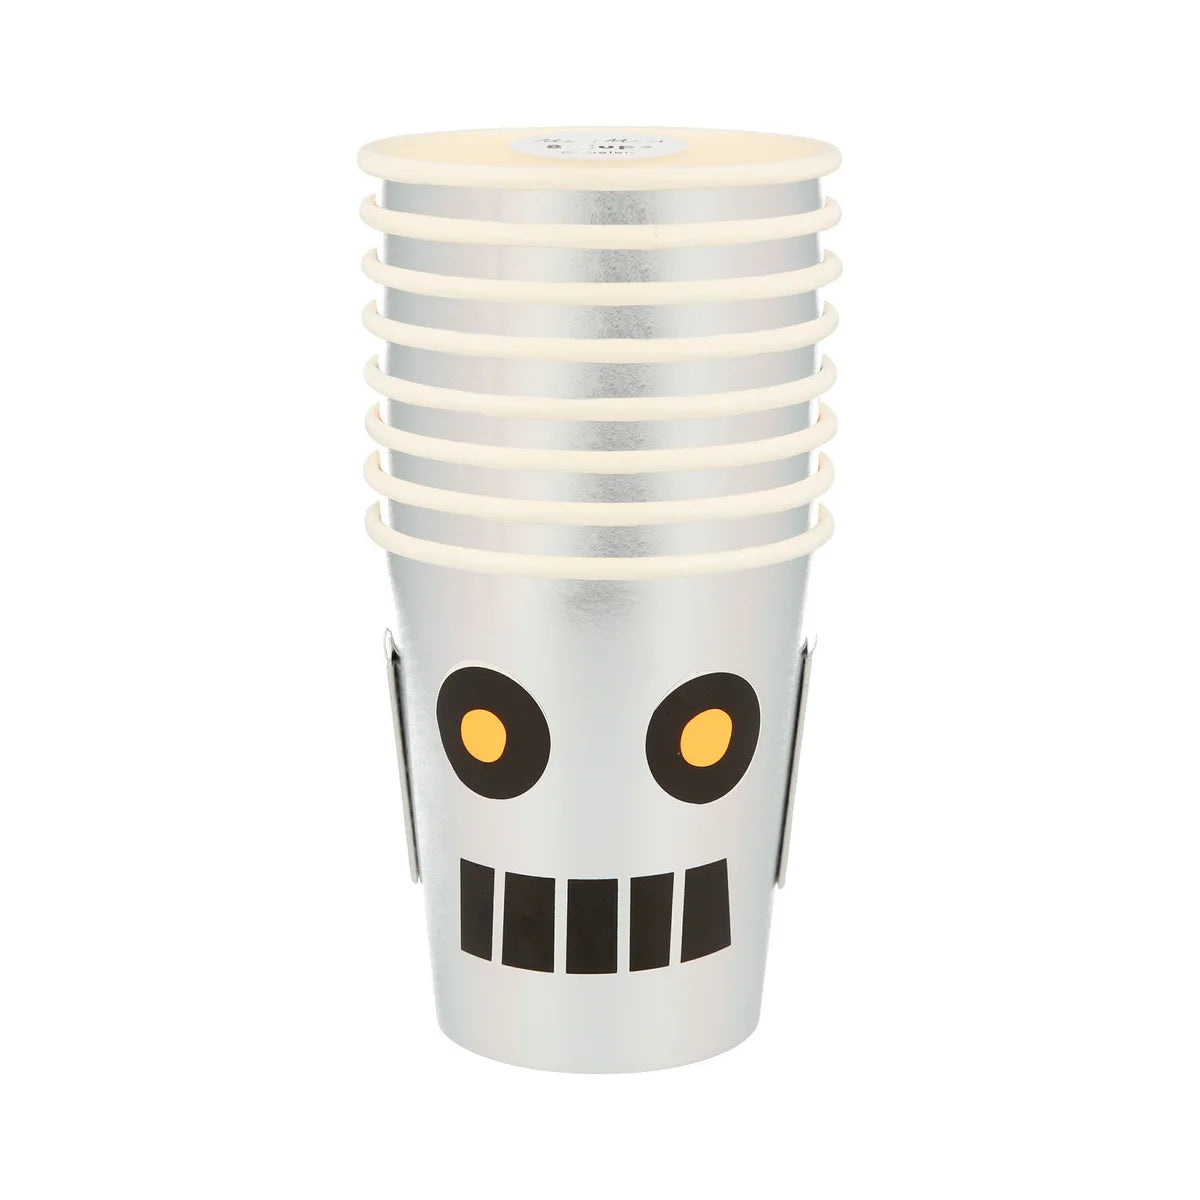 Silver robot cups sold at ALittleConfetti, By Meri Meri